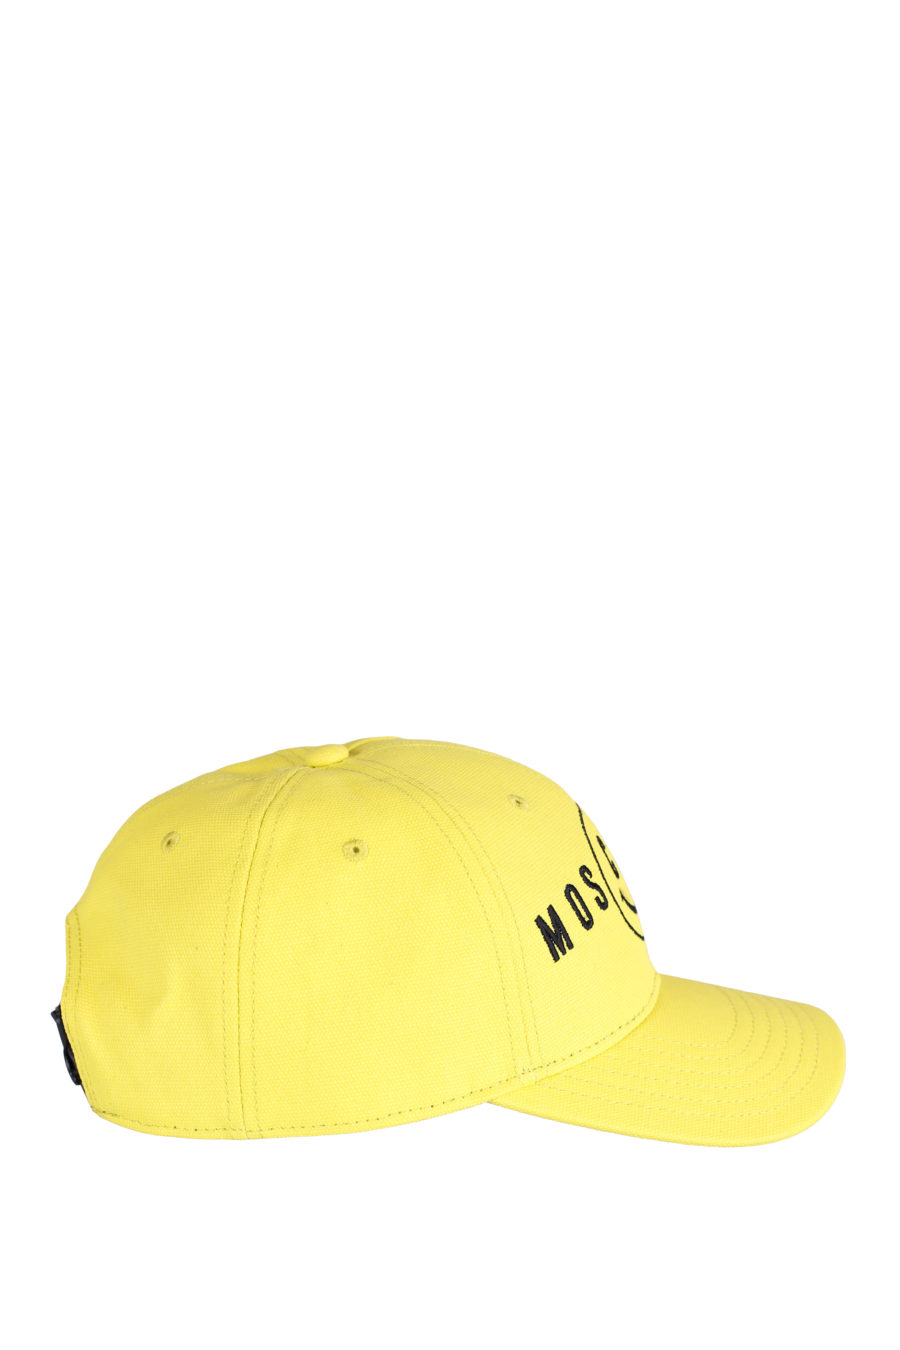 Yellow cap with "Smiley" logo - IMG 0814